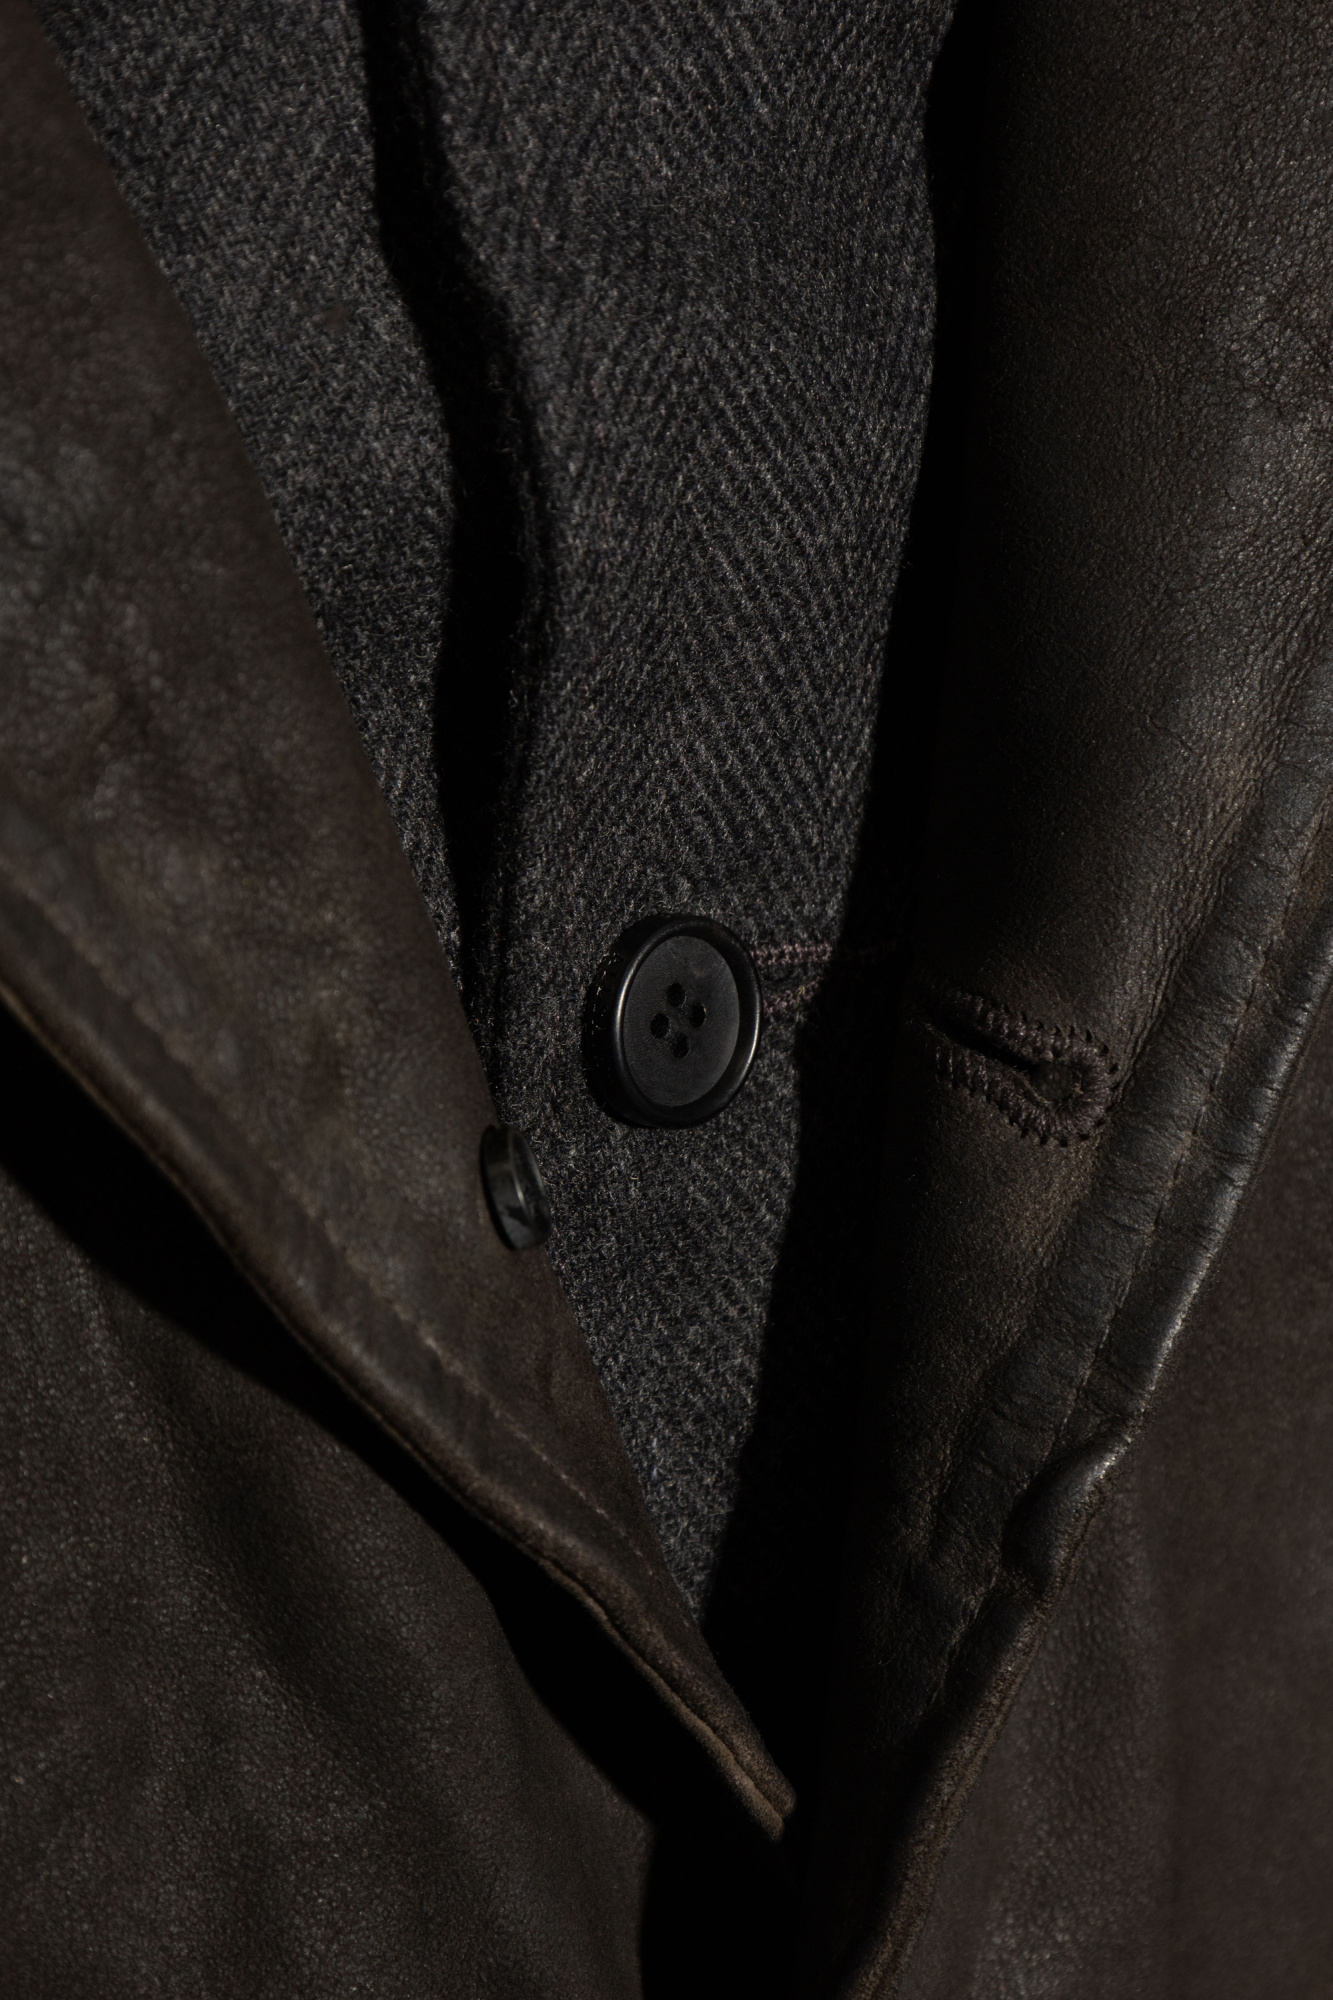 AllSaints ‘Survey’ leather jacket